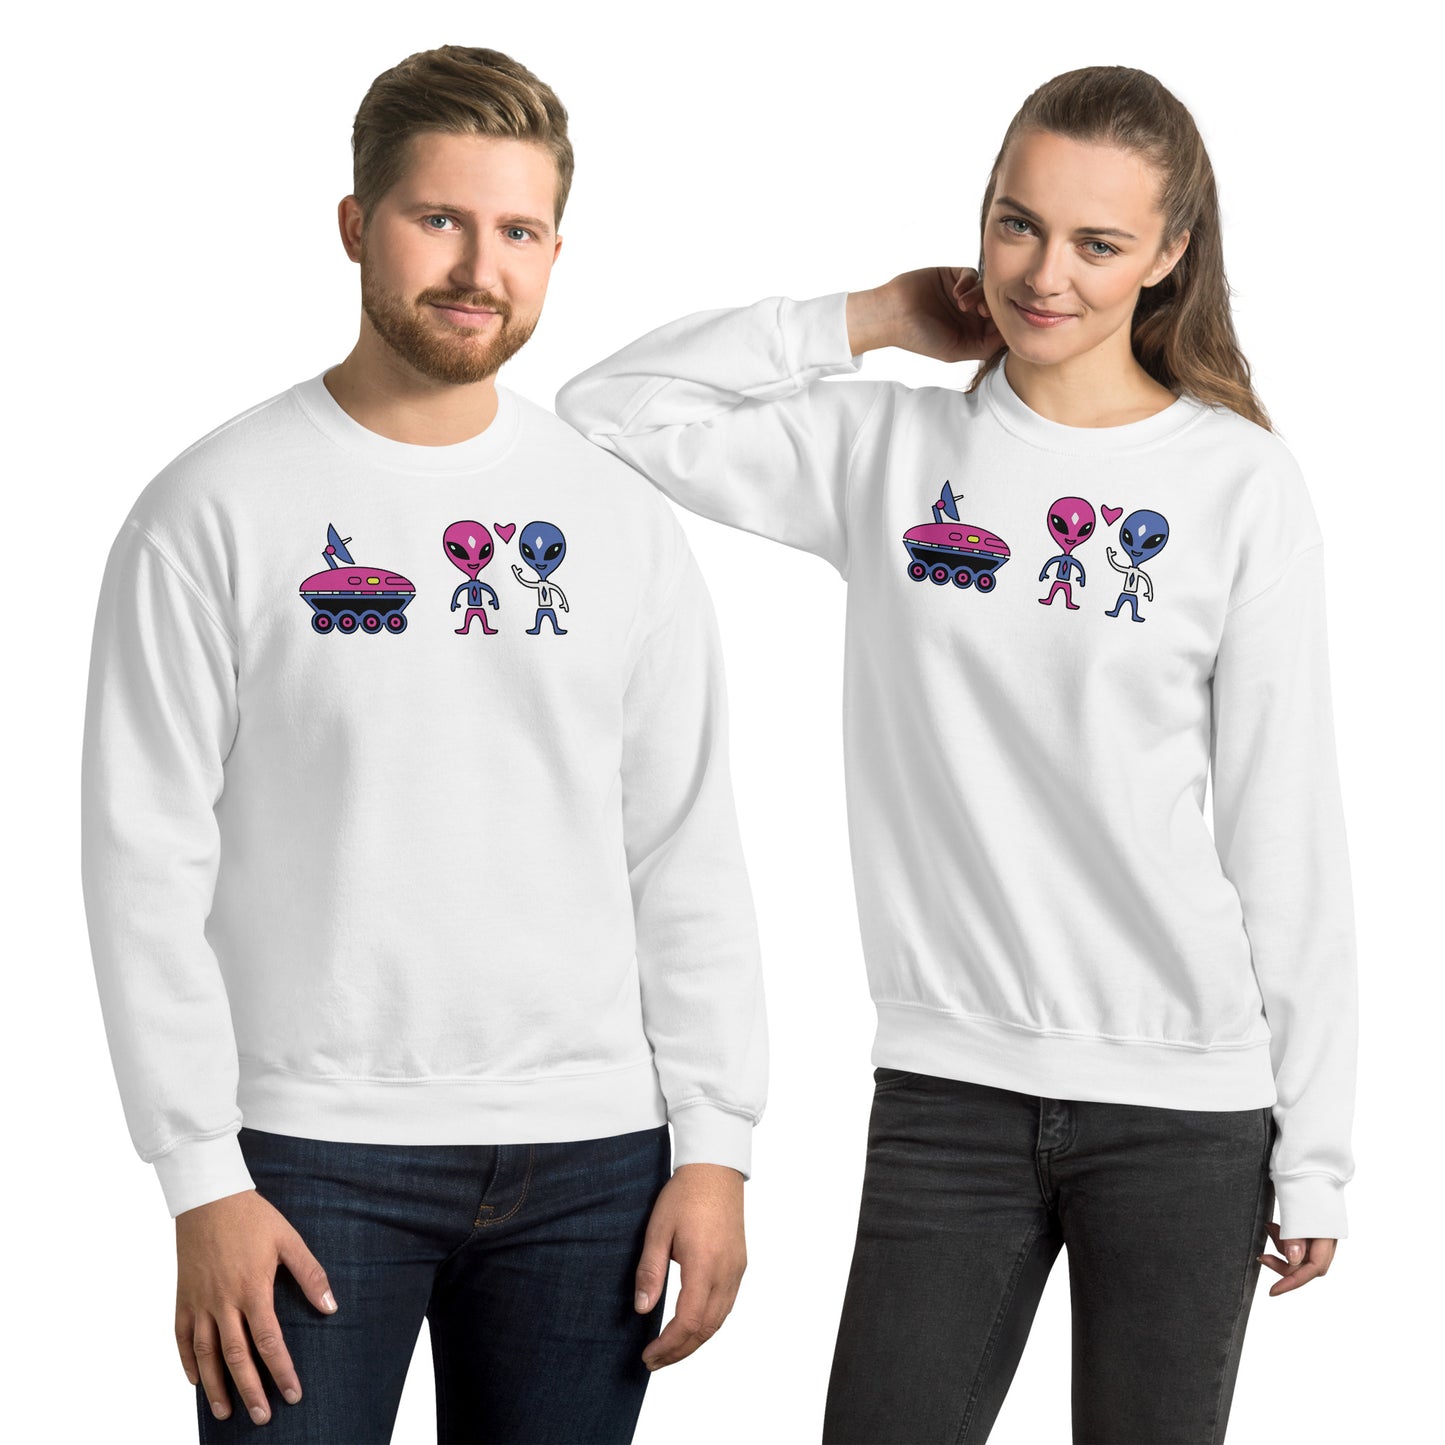 Rover and Aliens Sweatshirt - LuminoPlace